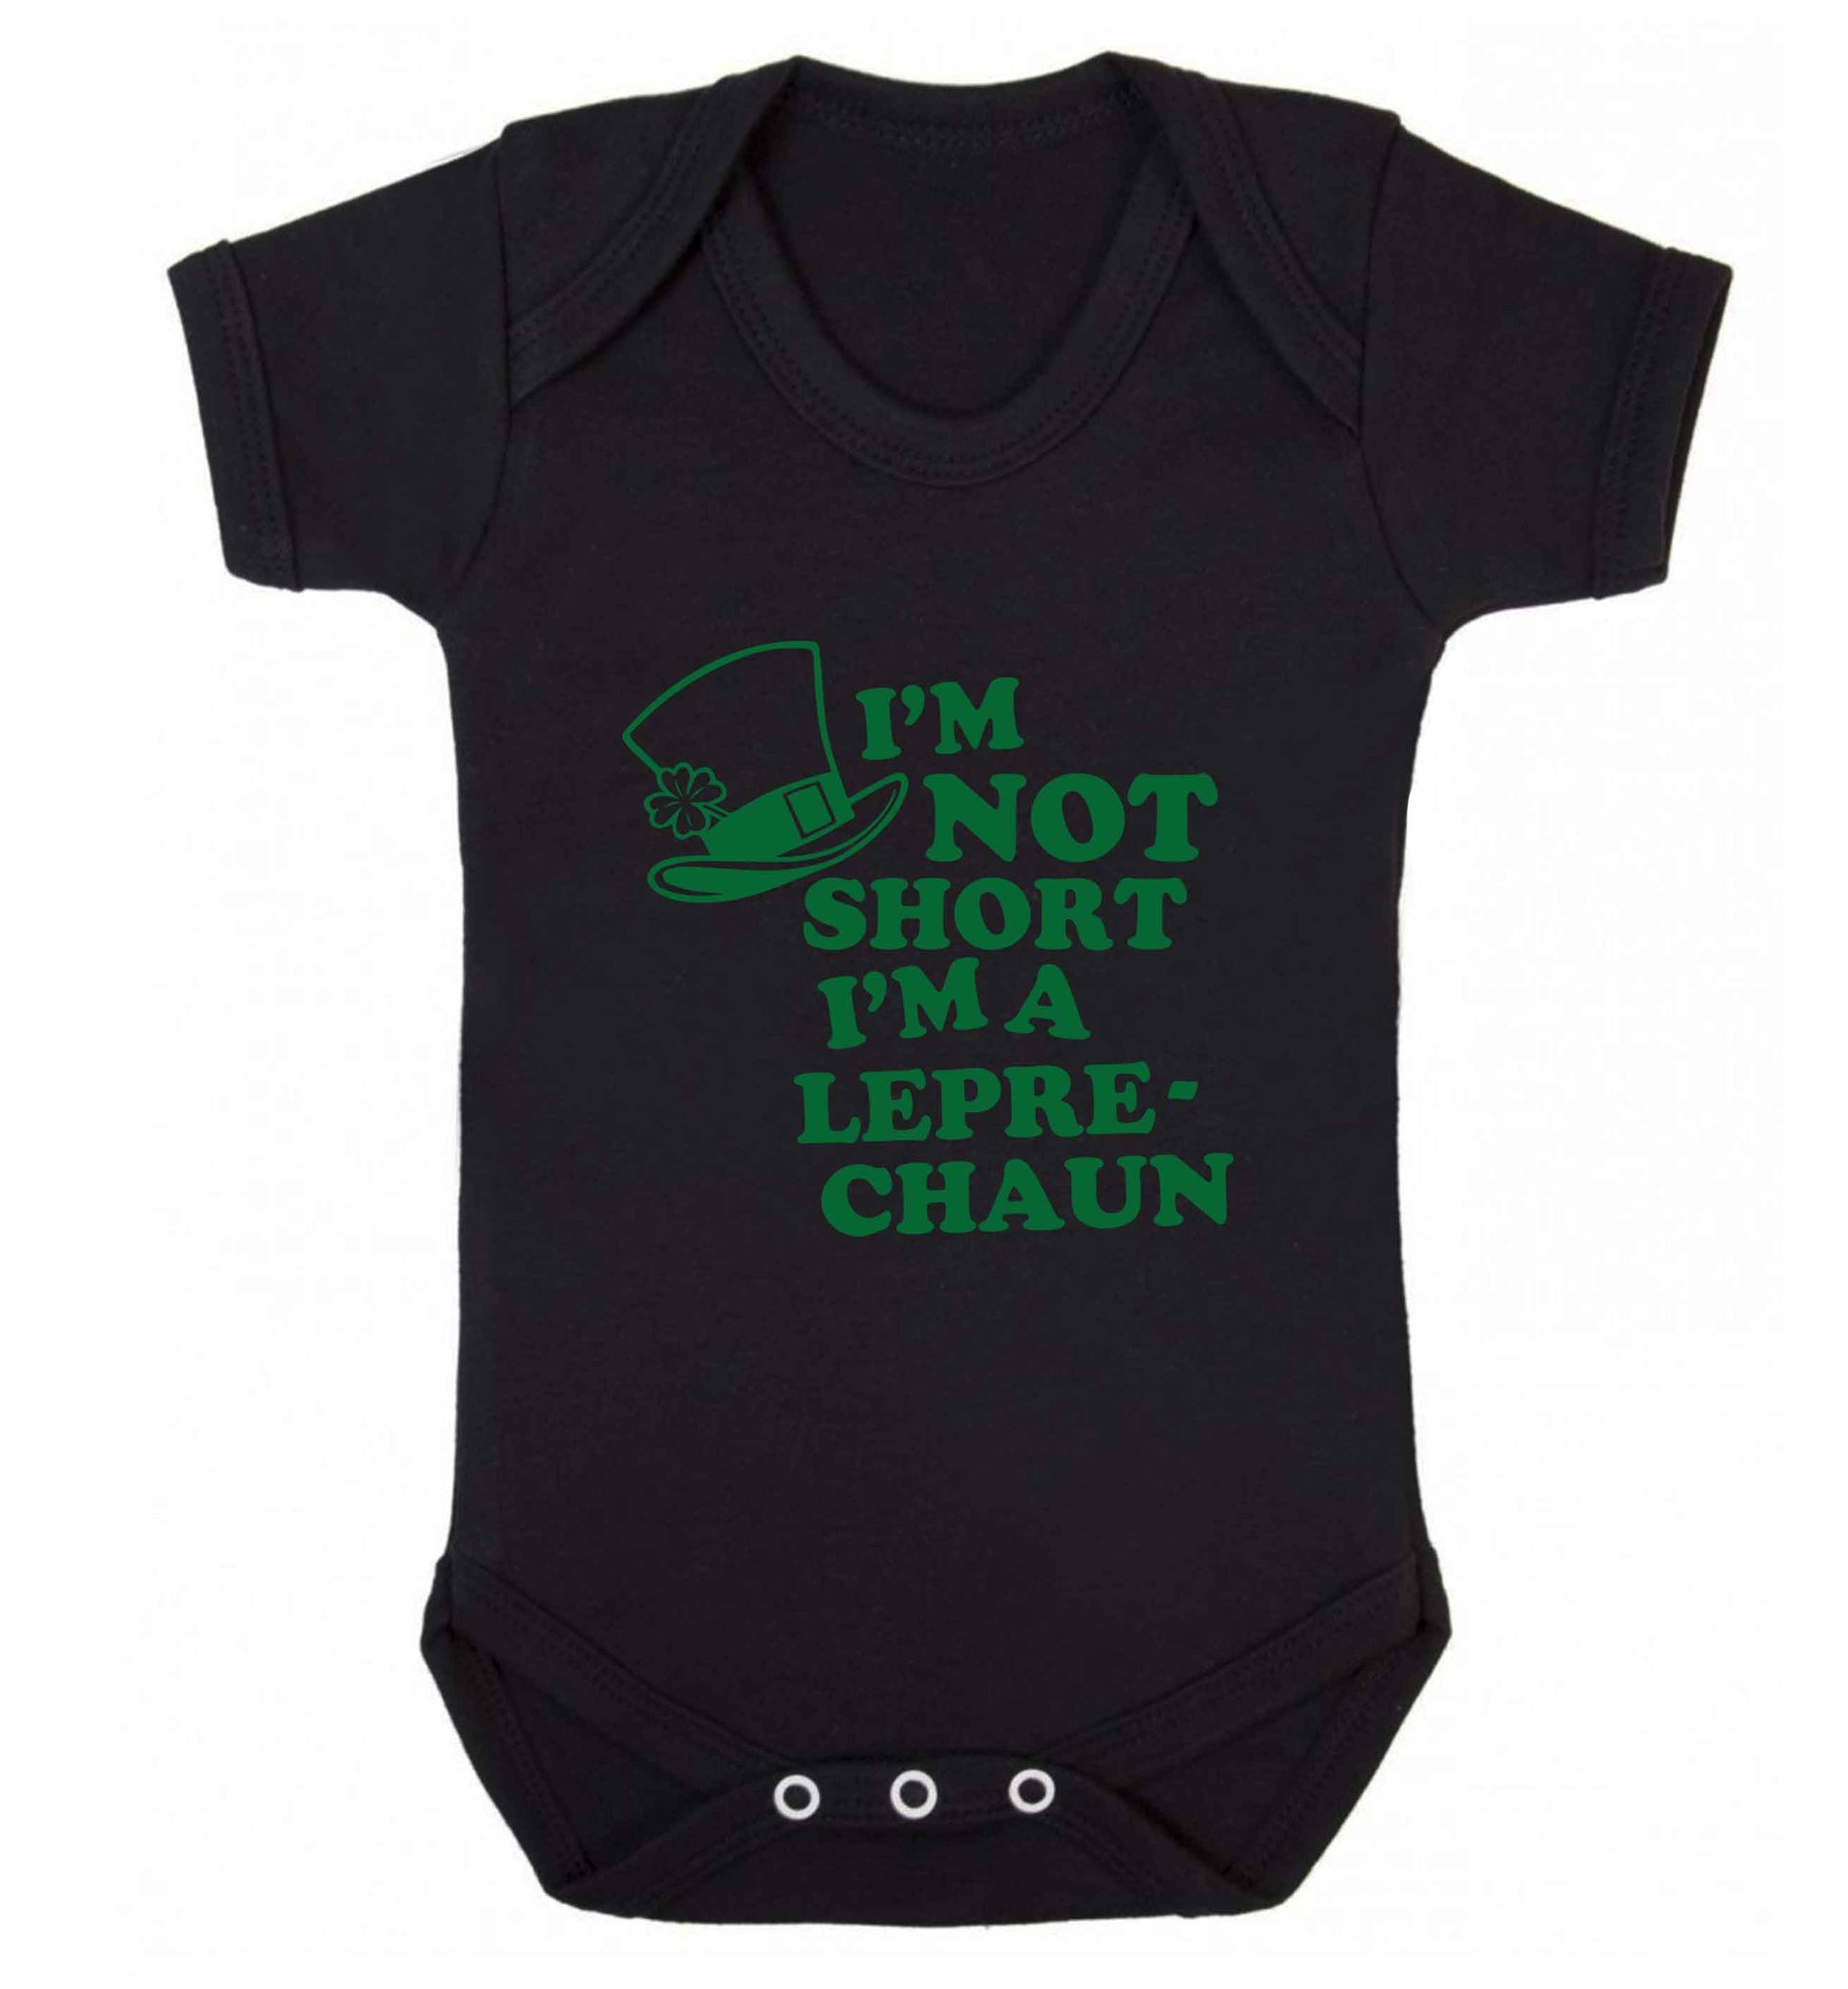 I'm not short I'm a leprechaun baby vest black 18-24 months